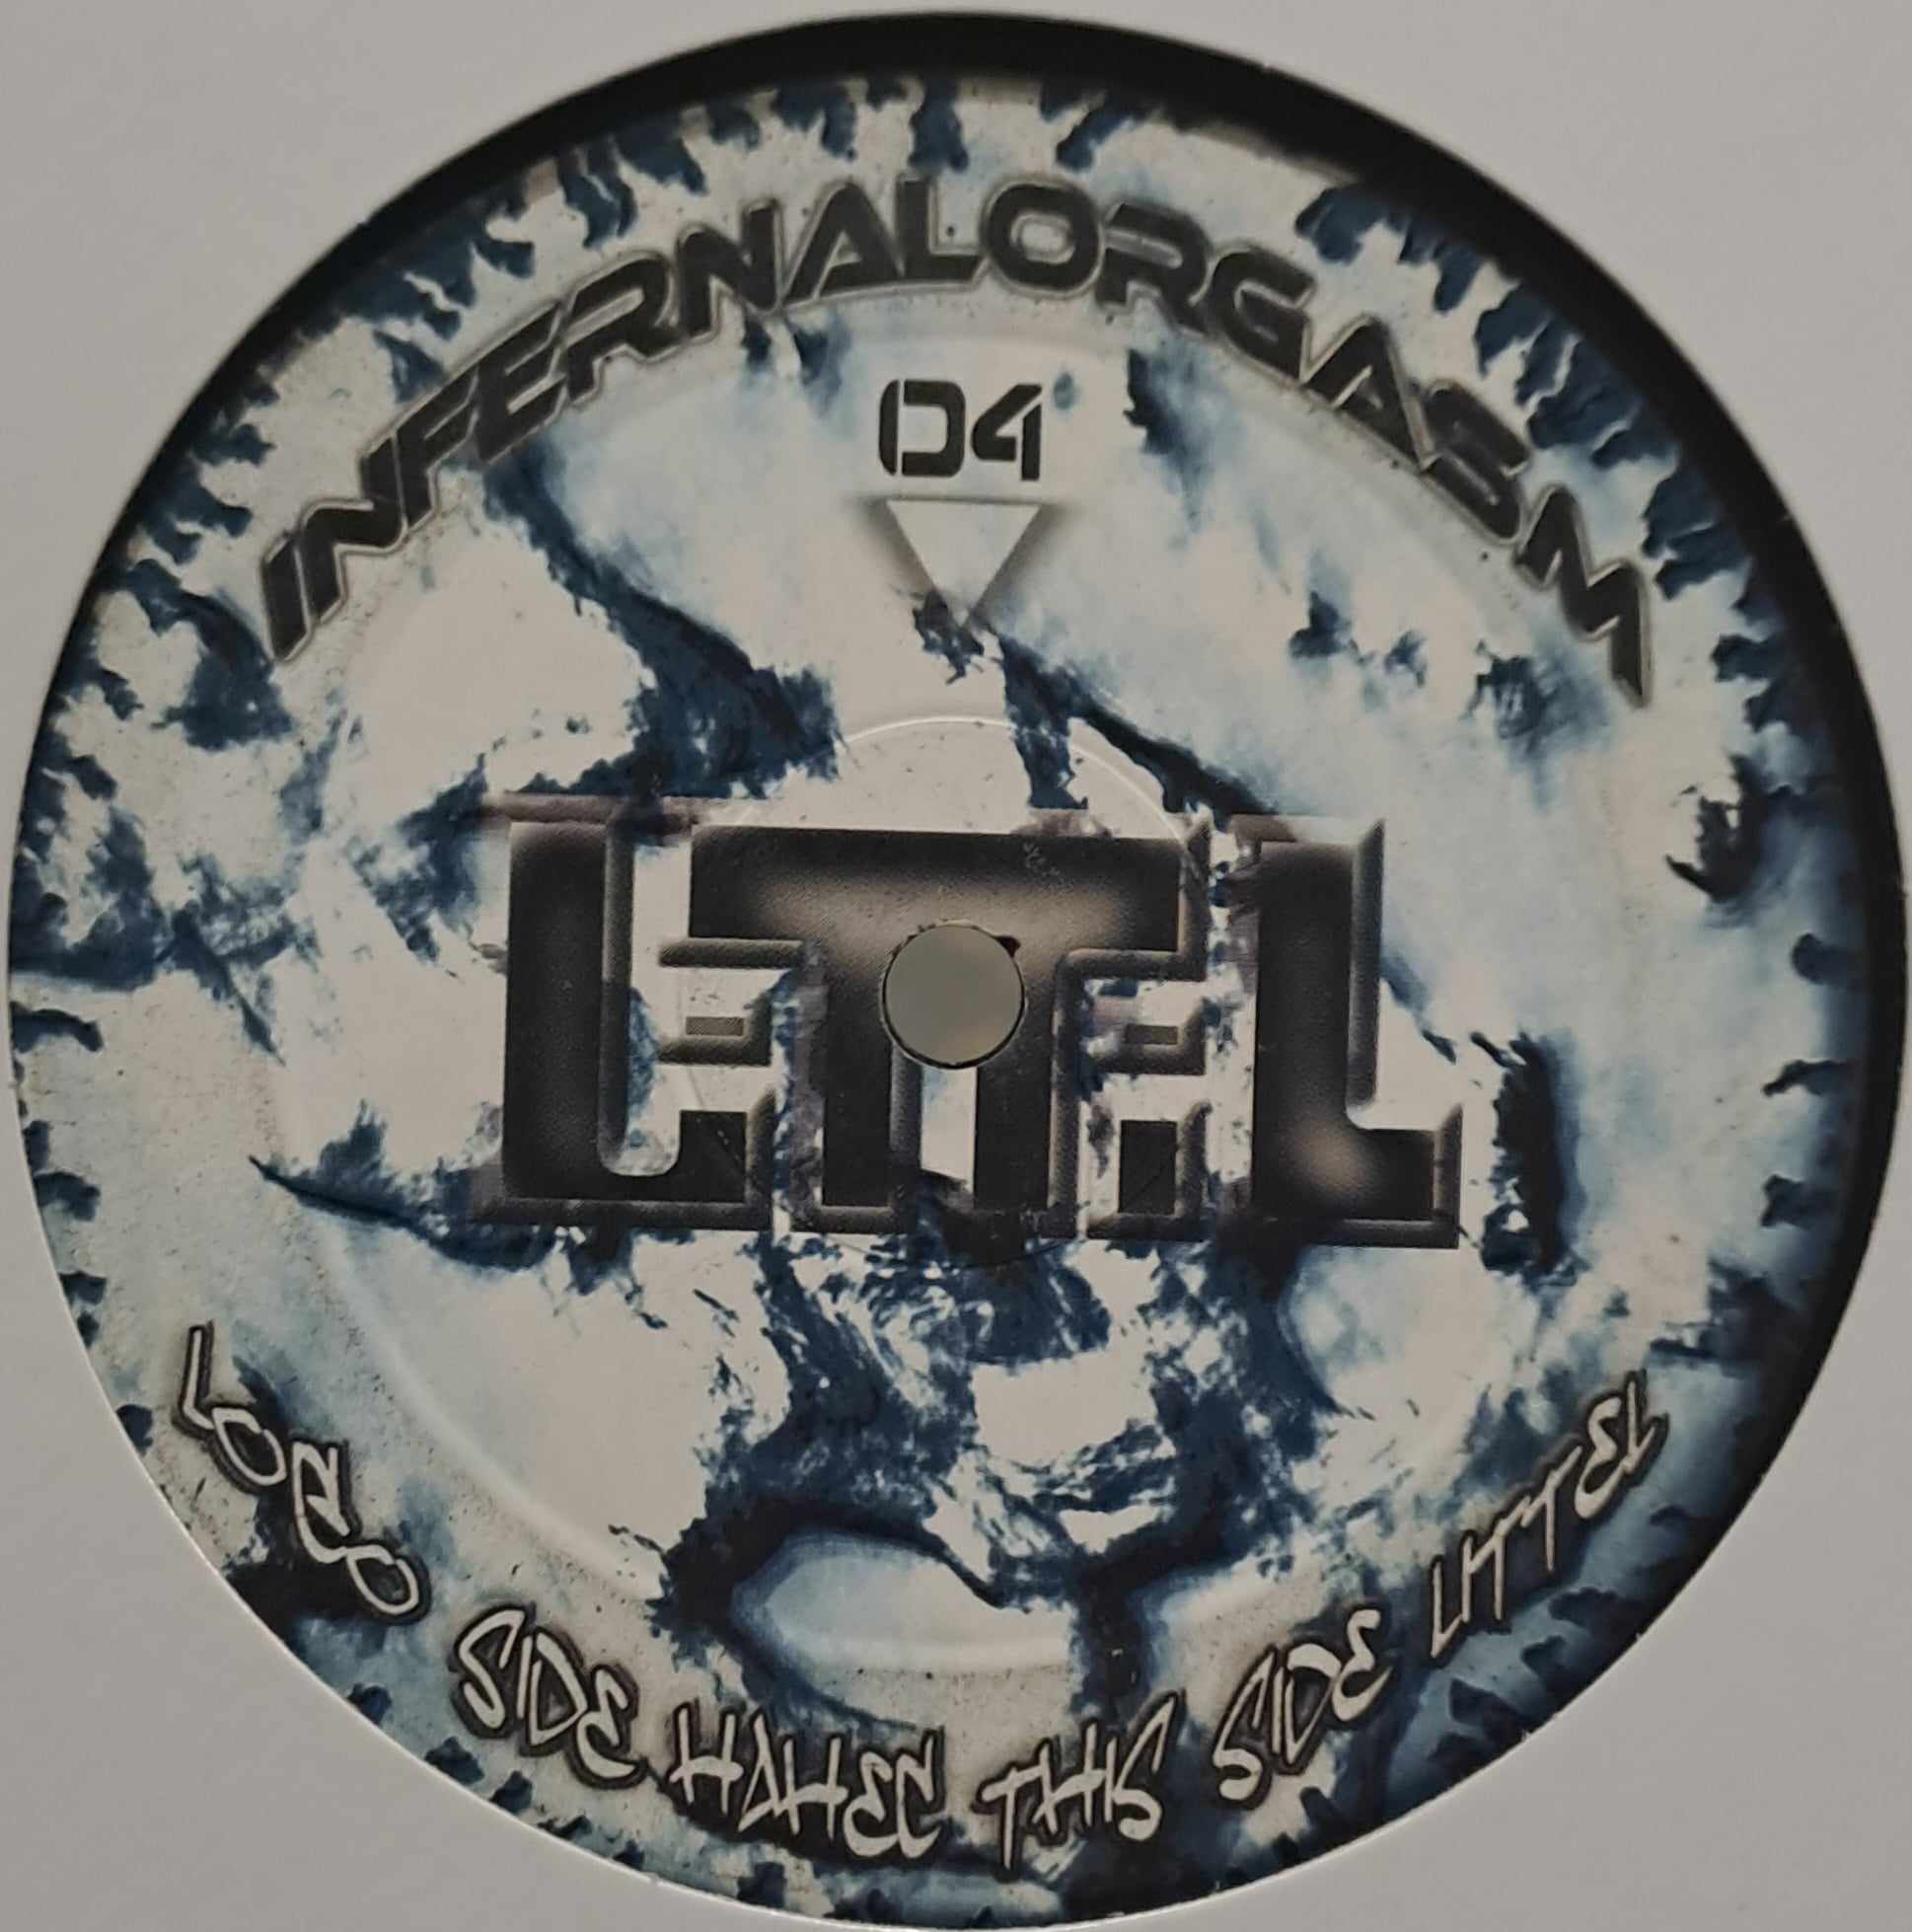 Infernalorgasm 04 - vinyle hardcore